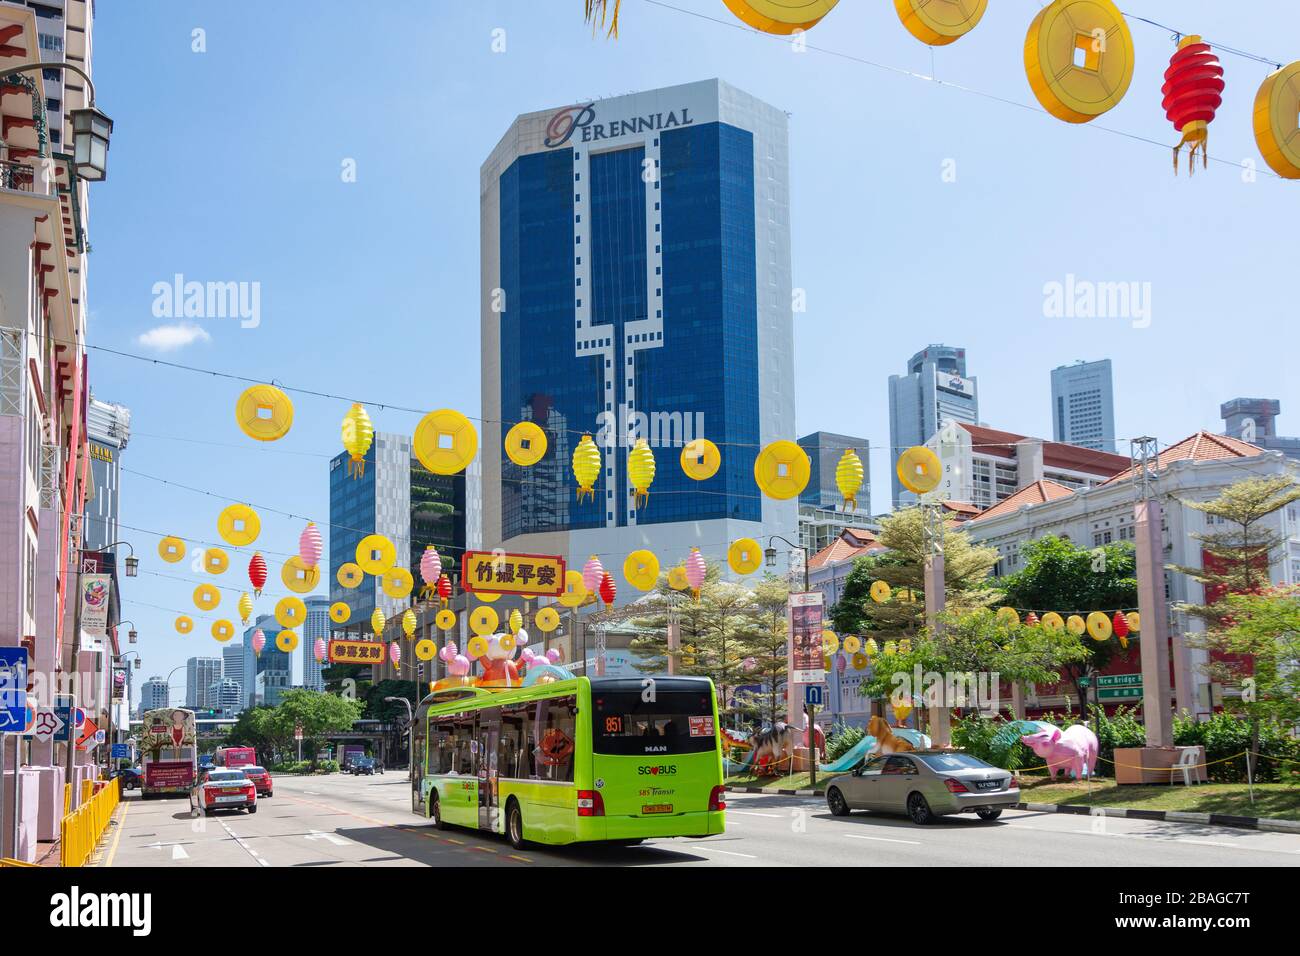 Chinese New Year decorations, Eu Tong Sen Street, Chinatown, Republic of Singapore Stock Photo